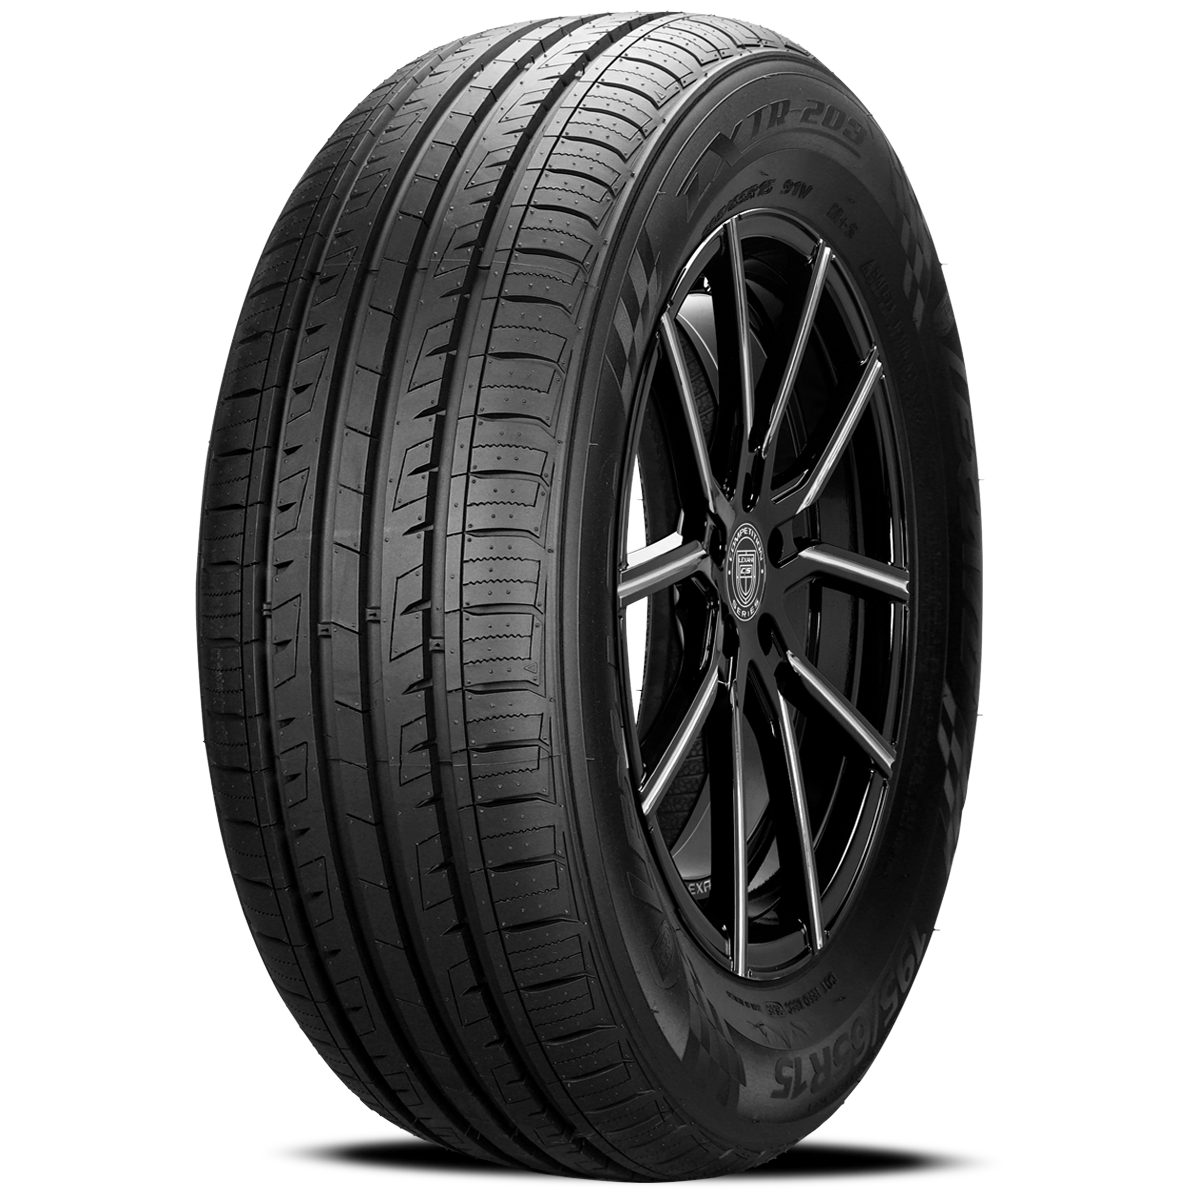 LEXANI LXTR-203 185/60R15 (23.7X7.3R 15) Tires